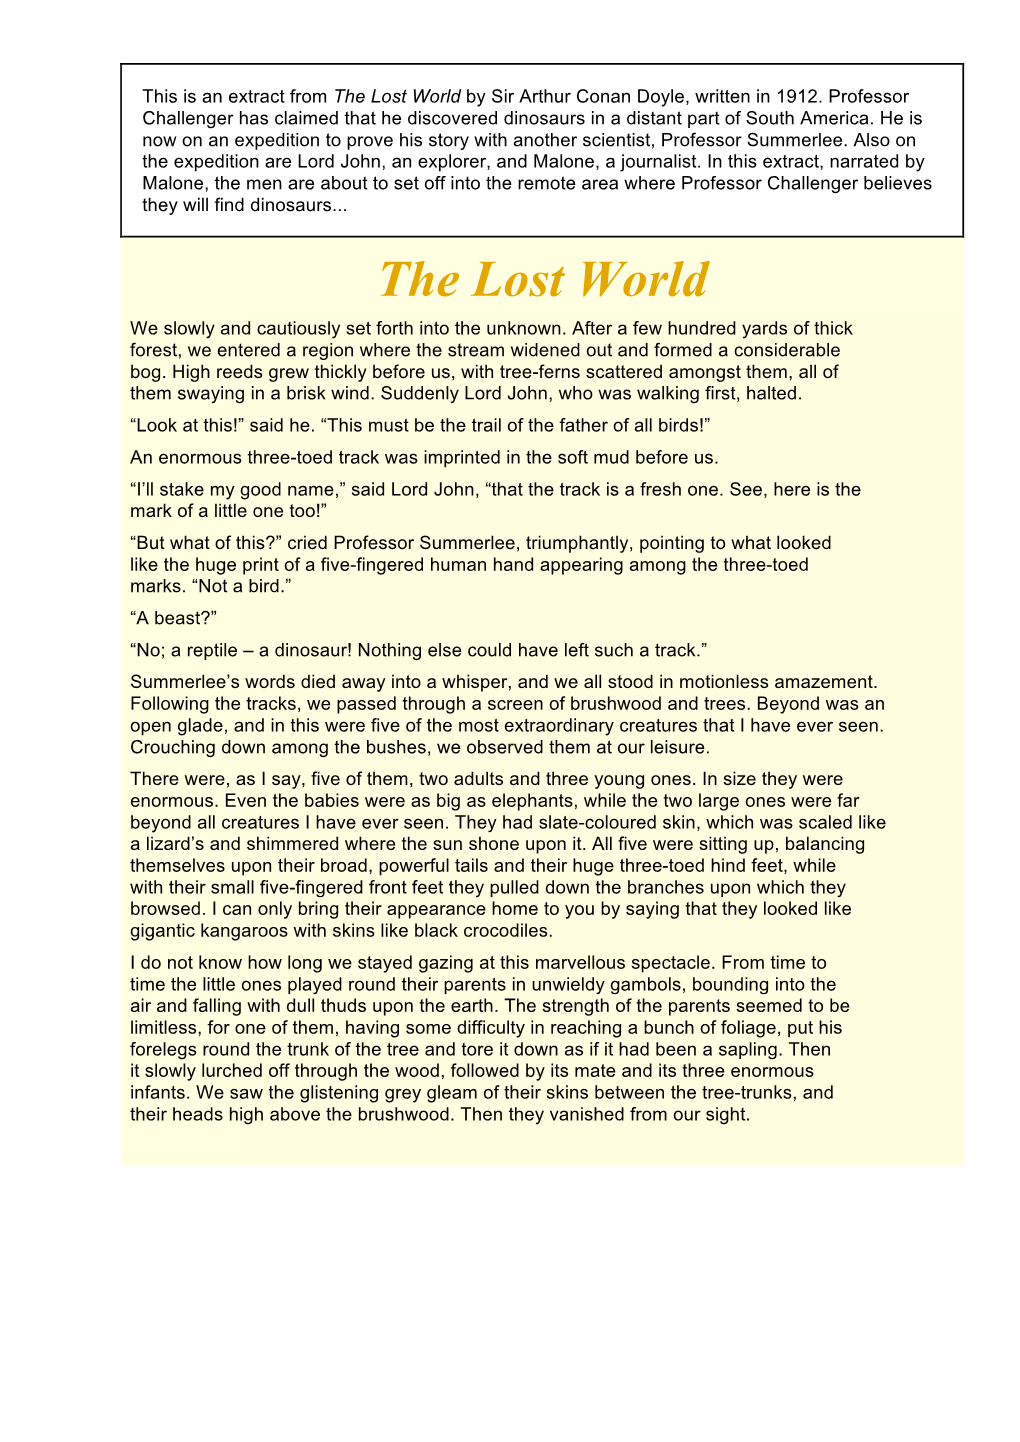 The Lost World by Sir Arthur Conan Doyle, Written in 1912